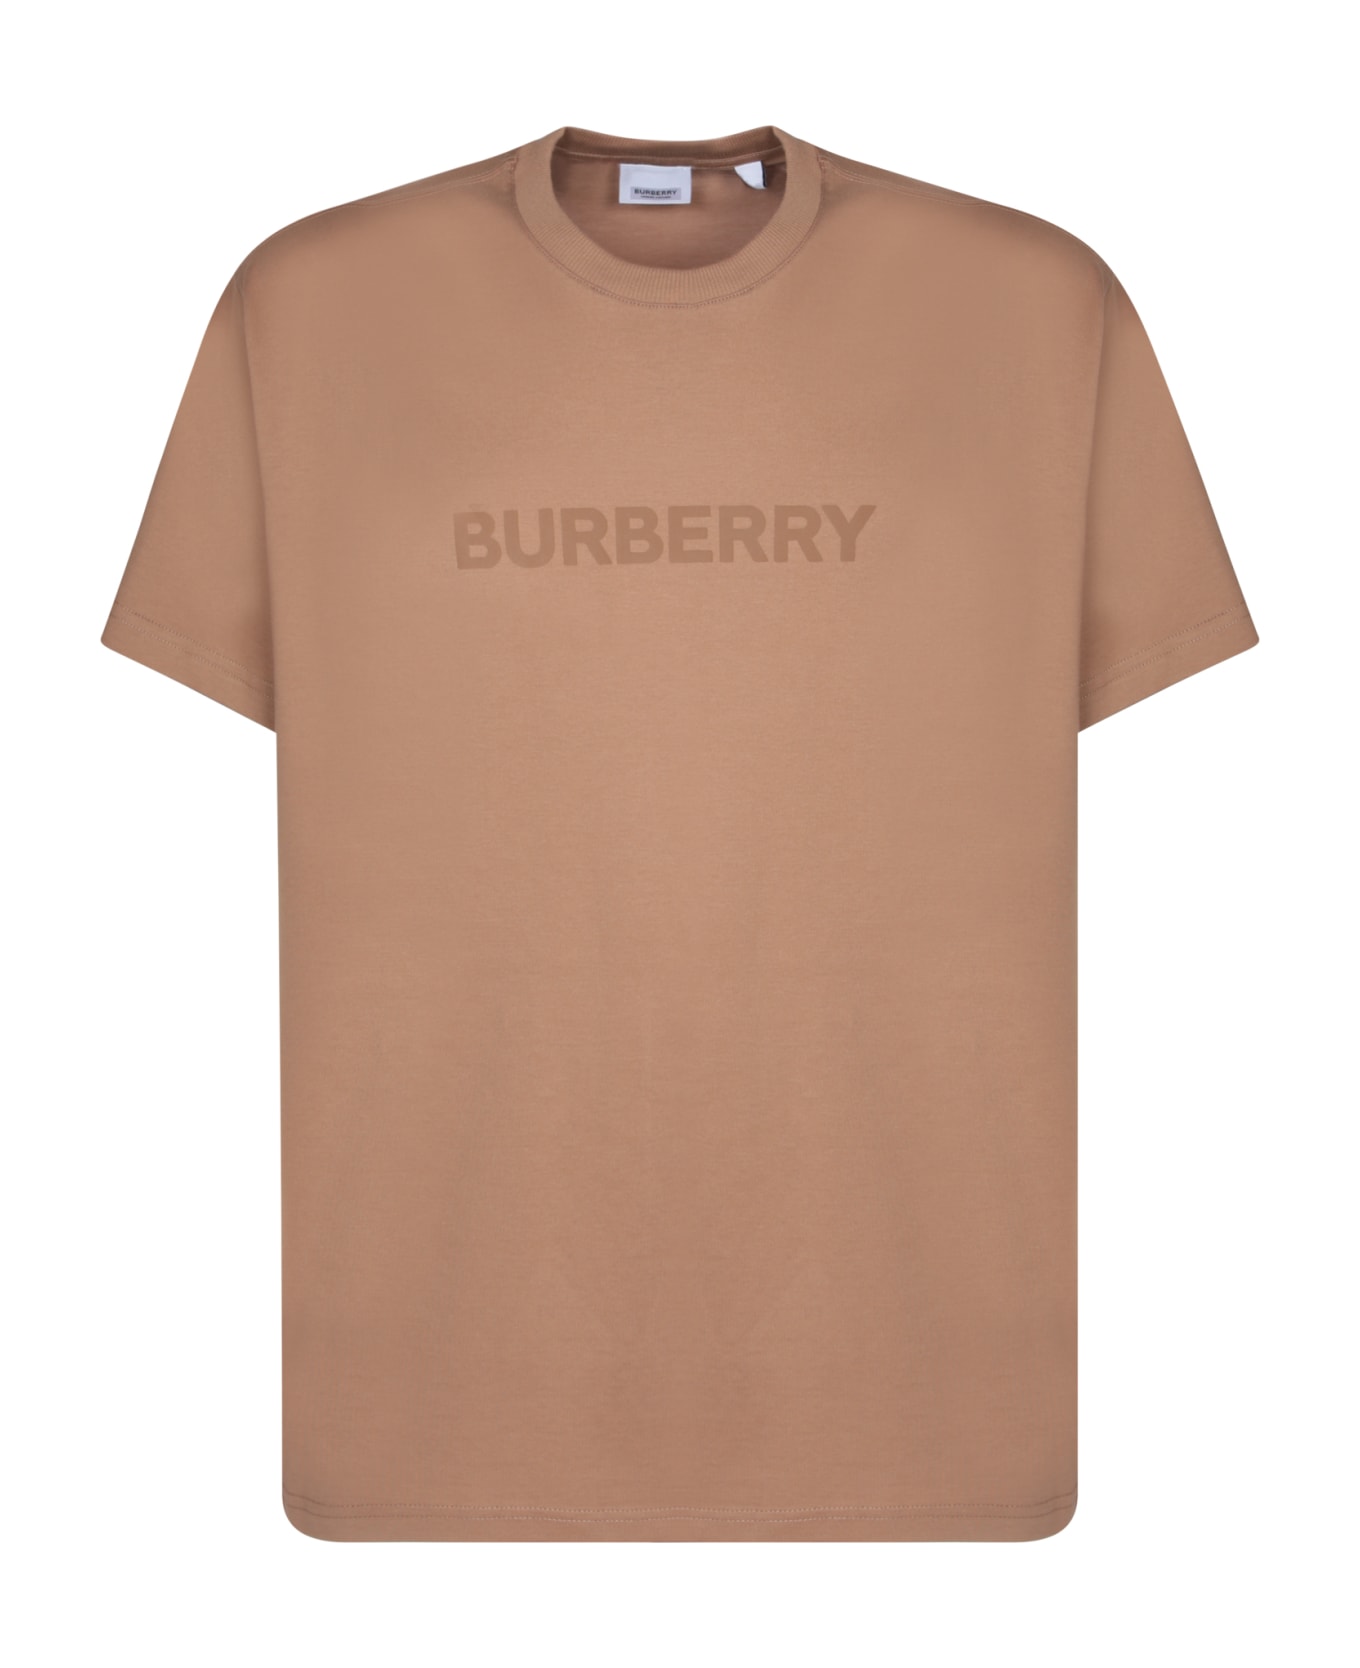 Burberry T-shirt - CAMEL